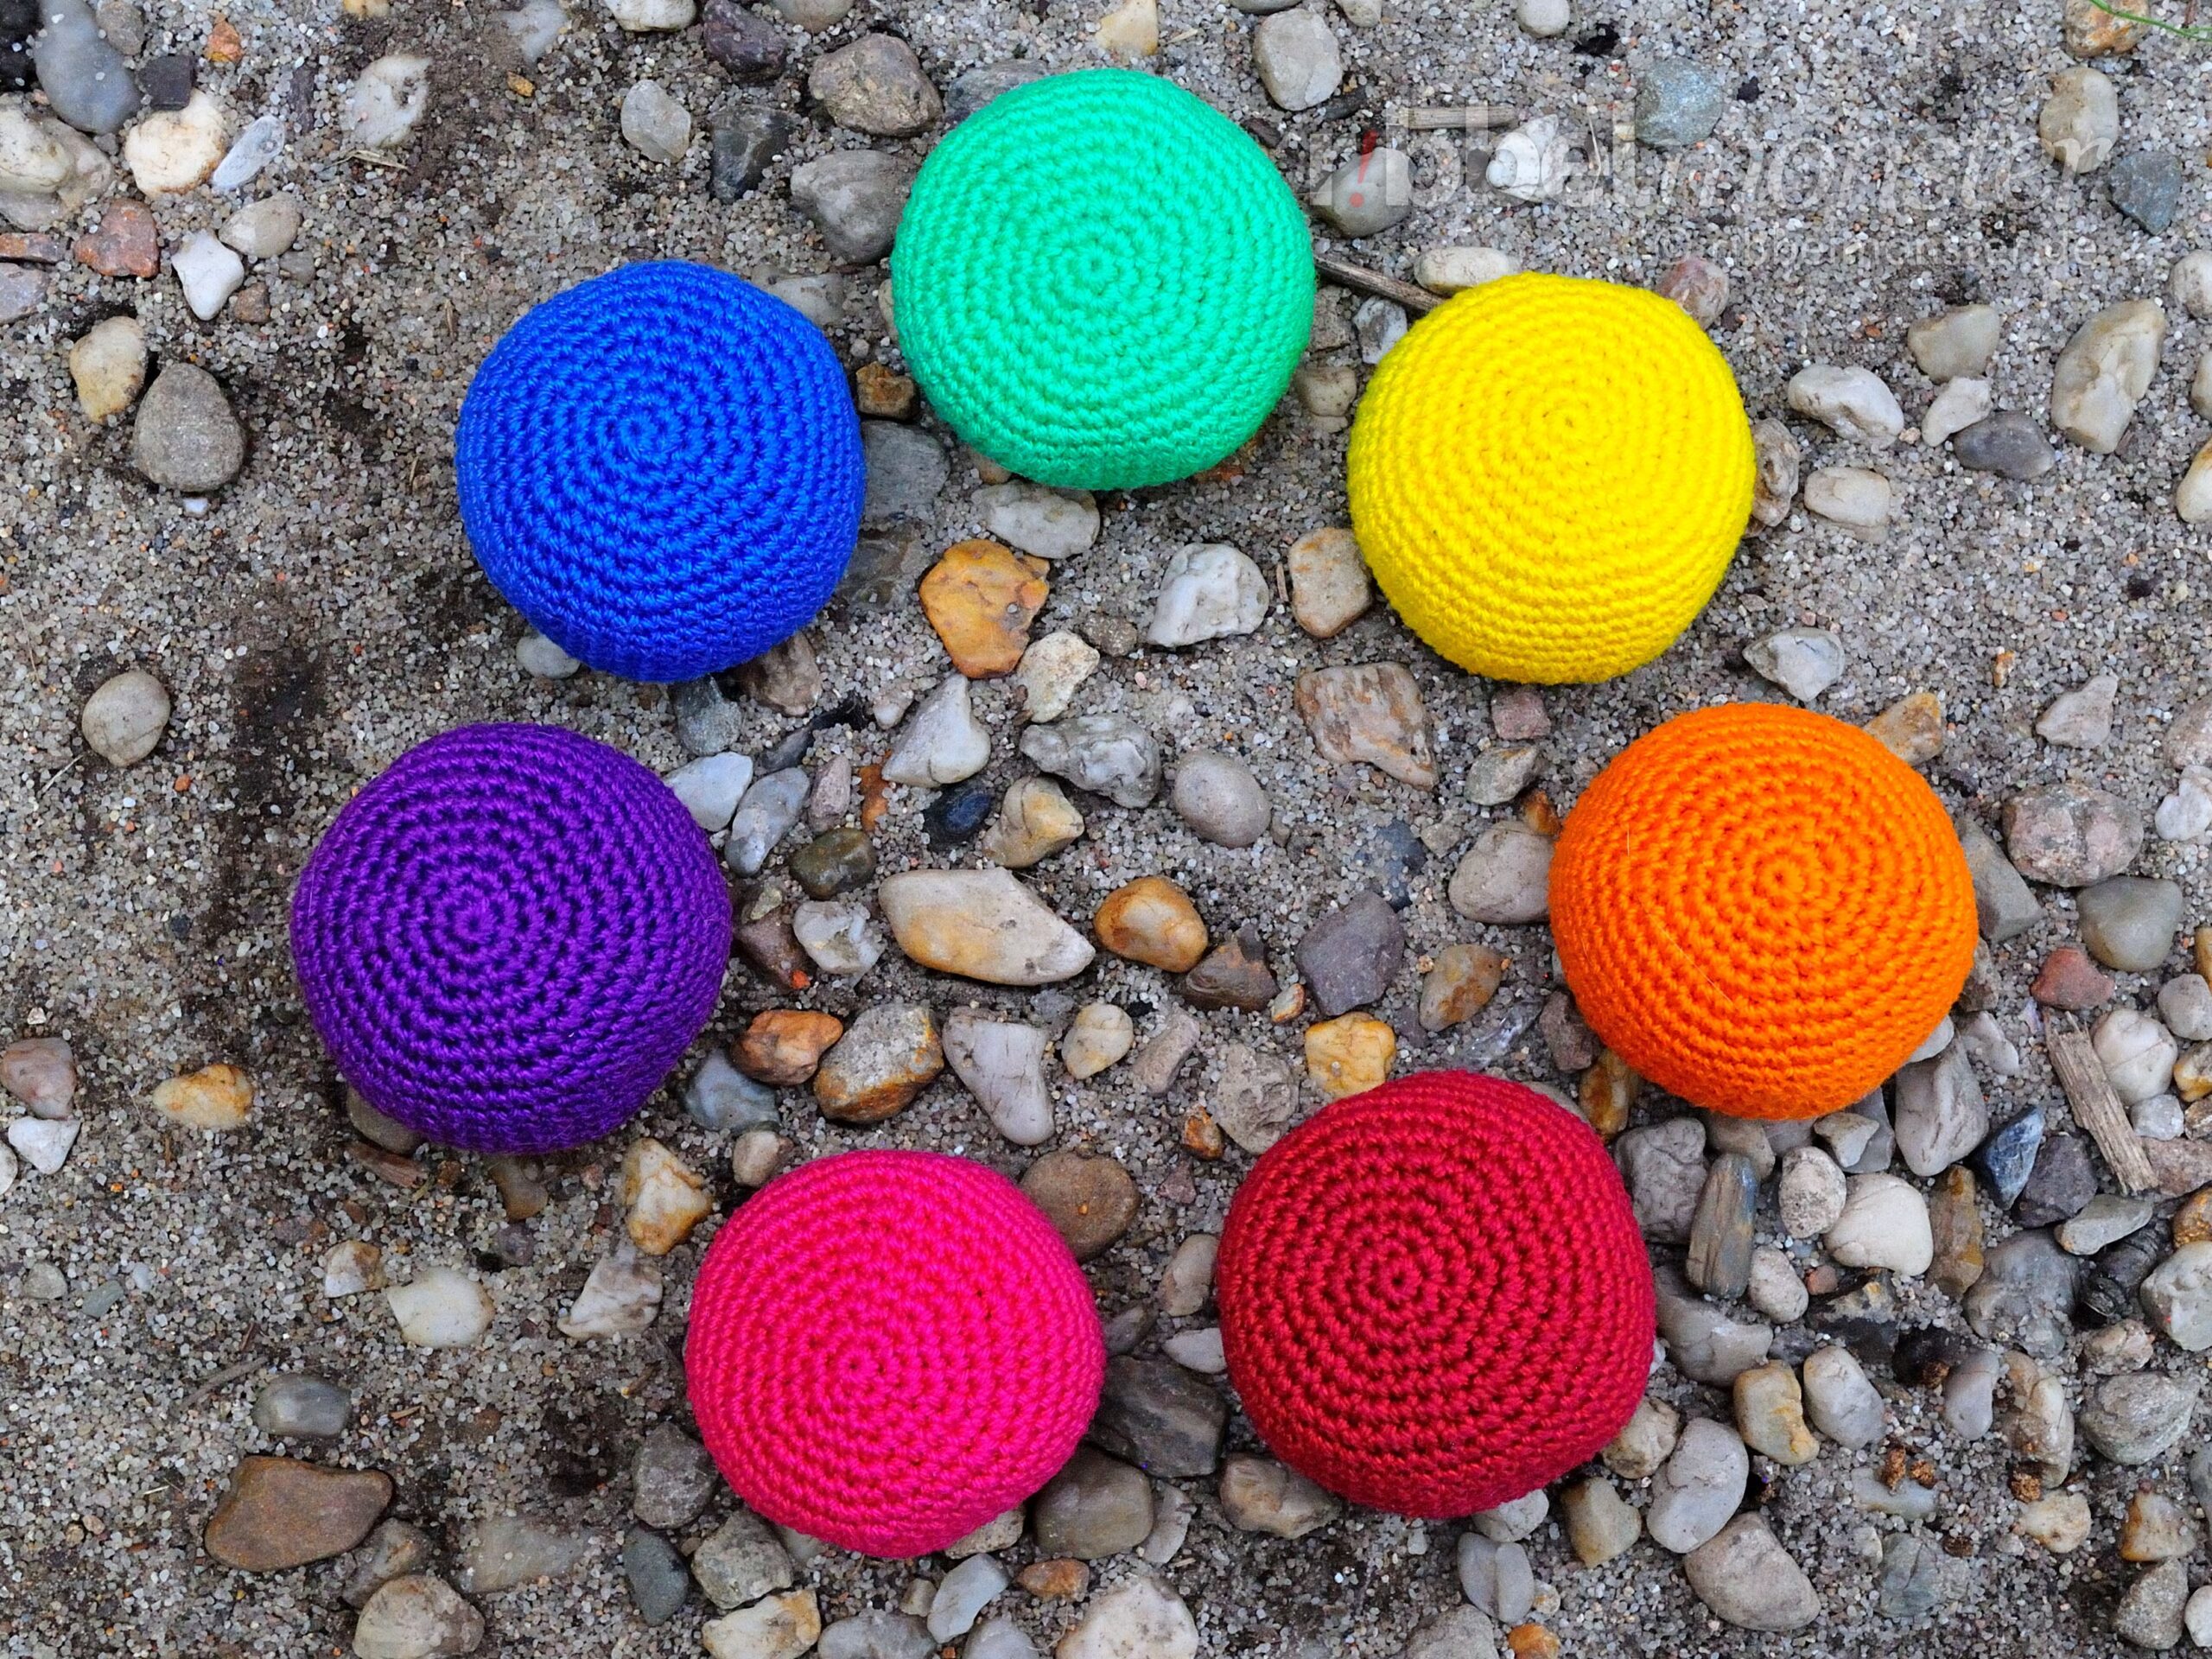 Crochet Simple Footbag “uni” – Hackysack, Juggling Ball, Stress Ball